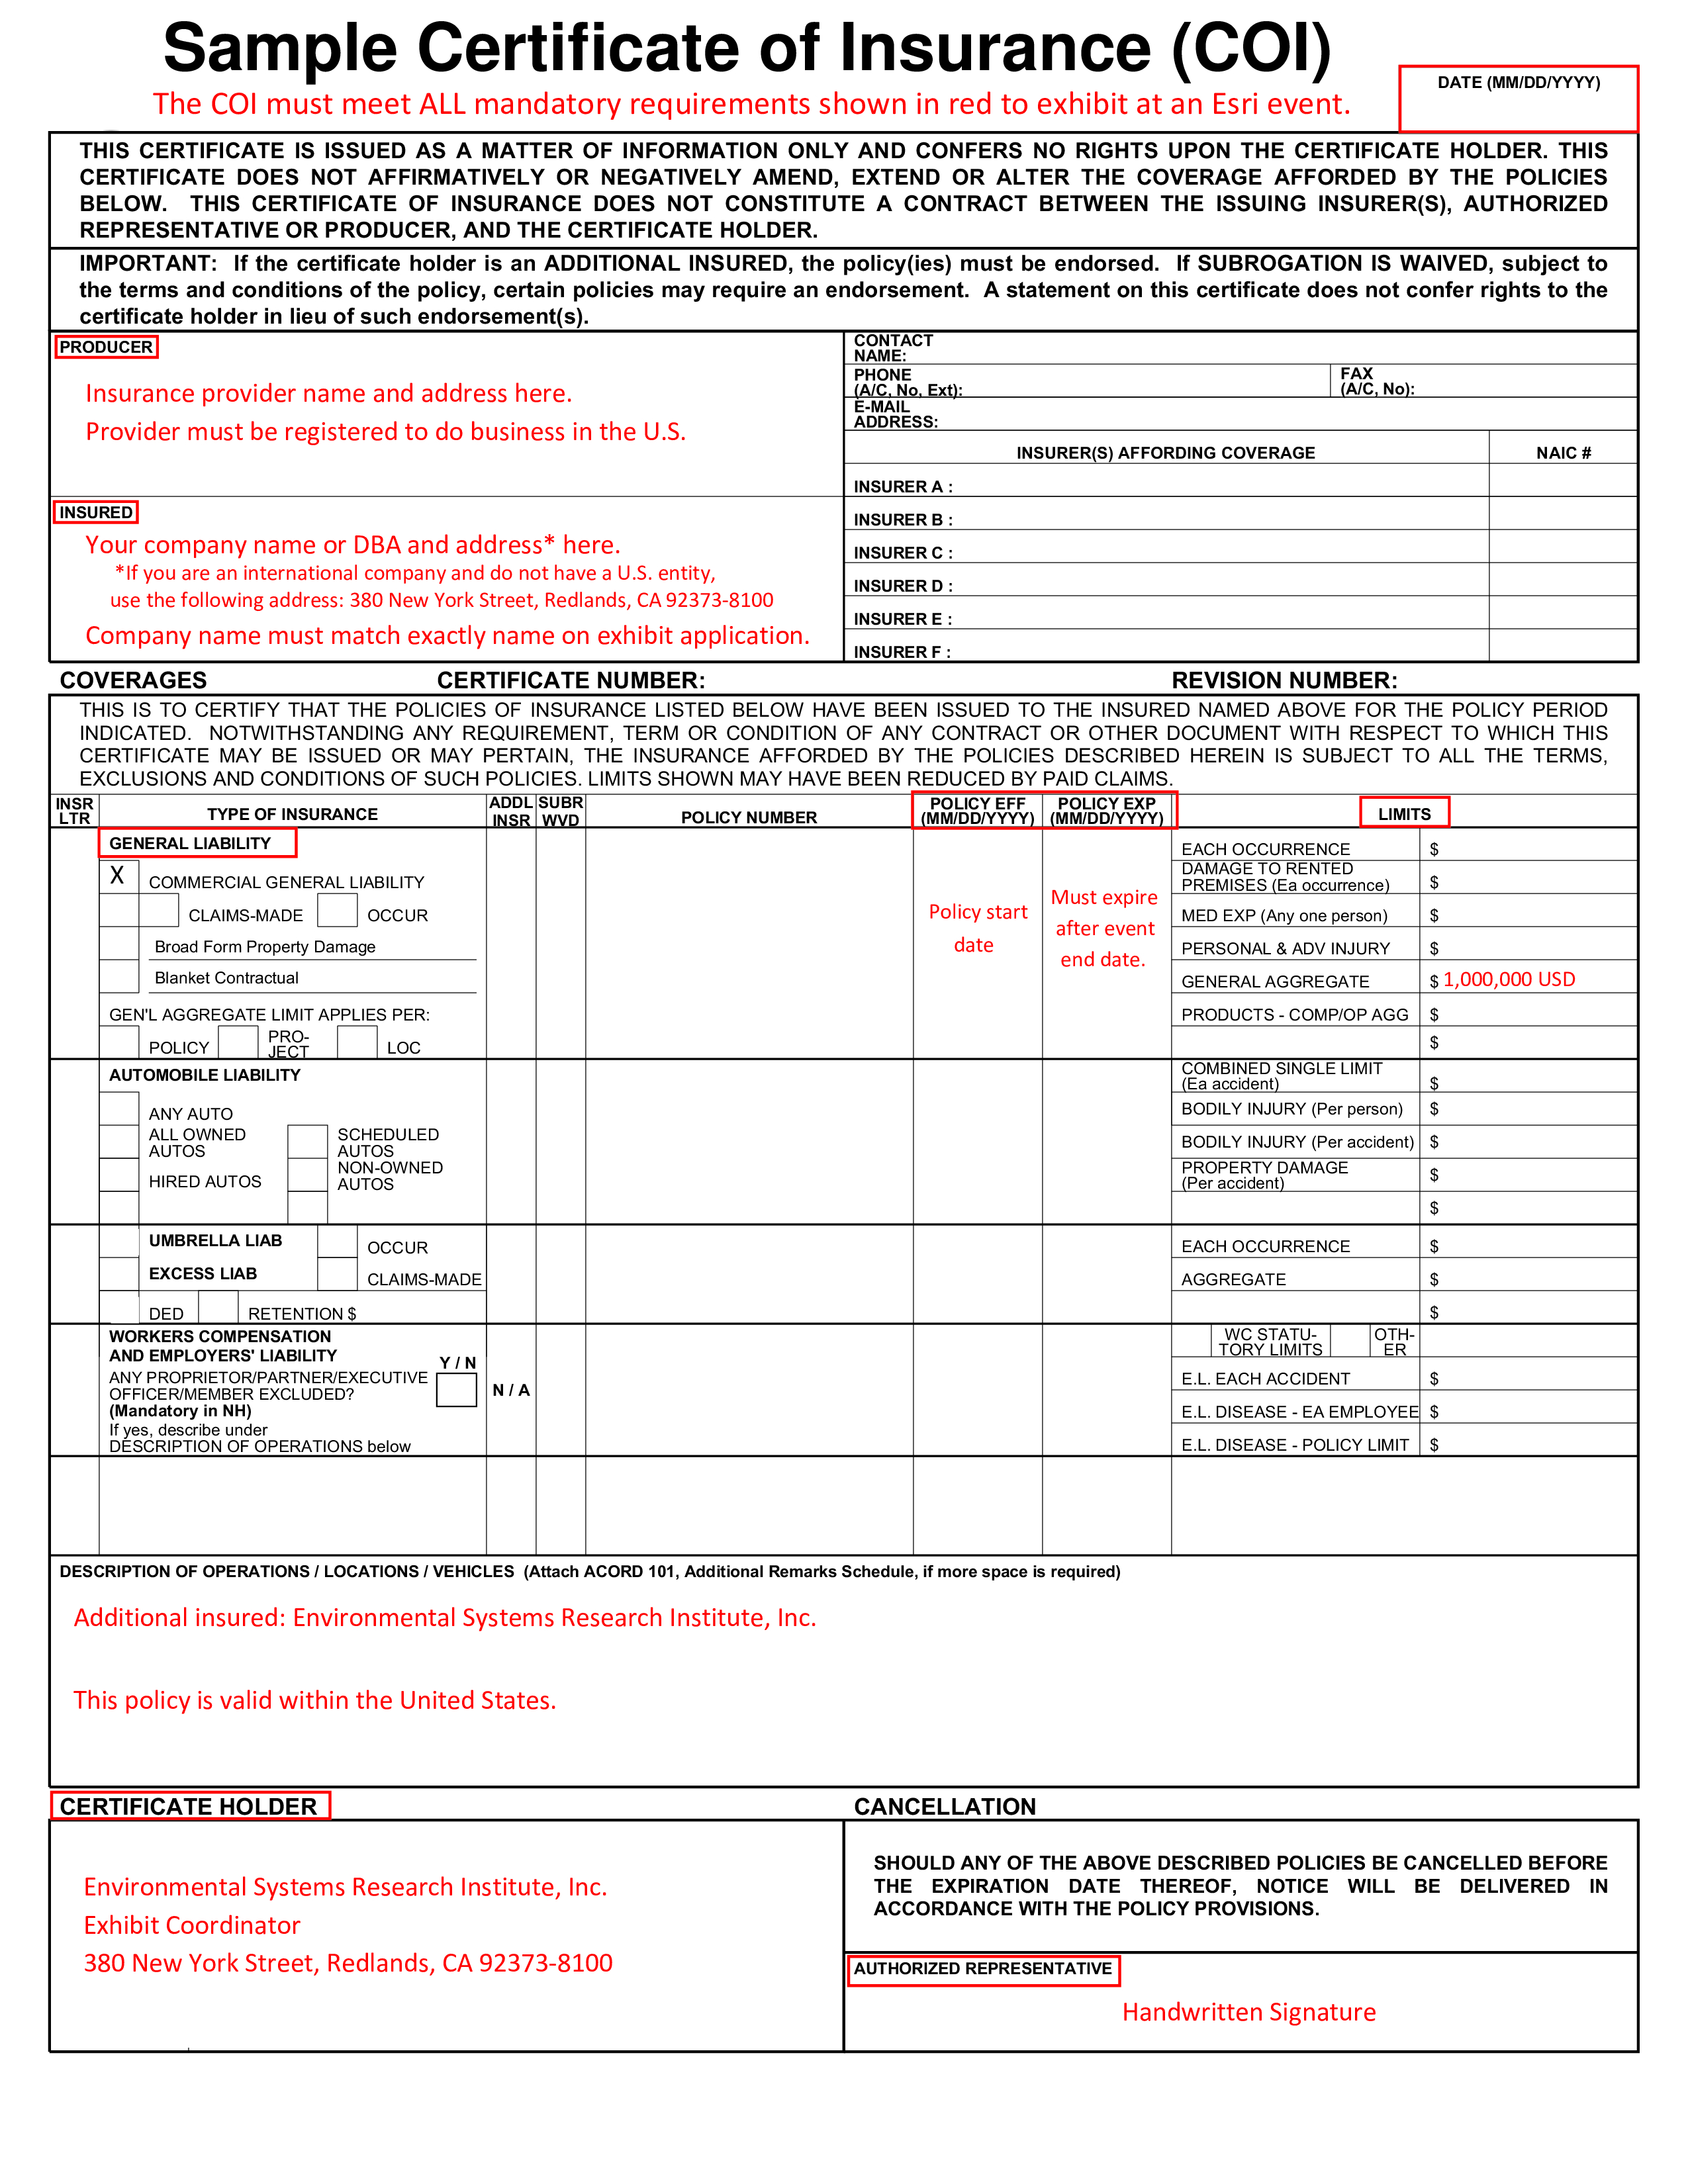 Sample Certificate Of Insurance (Coi) – Sample Certificate Within Certificate Of Insurance Template